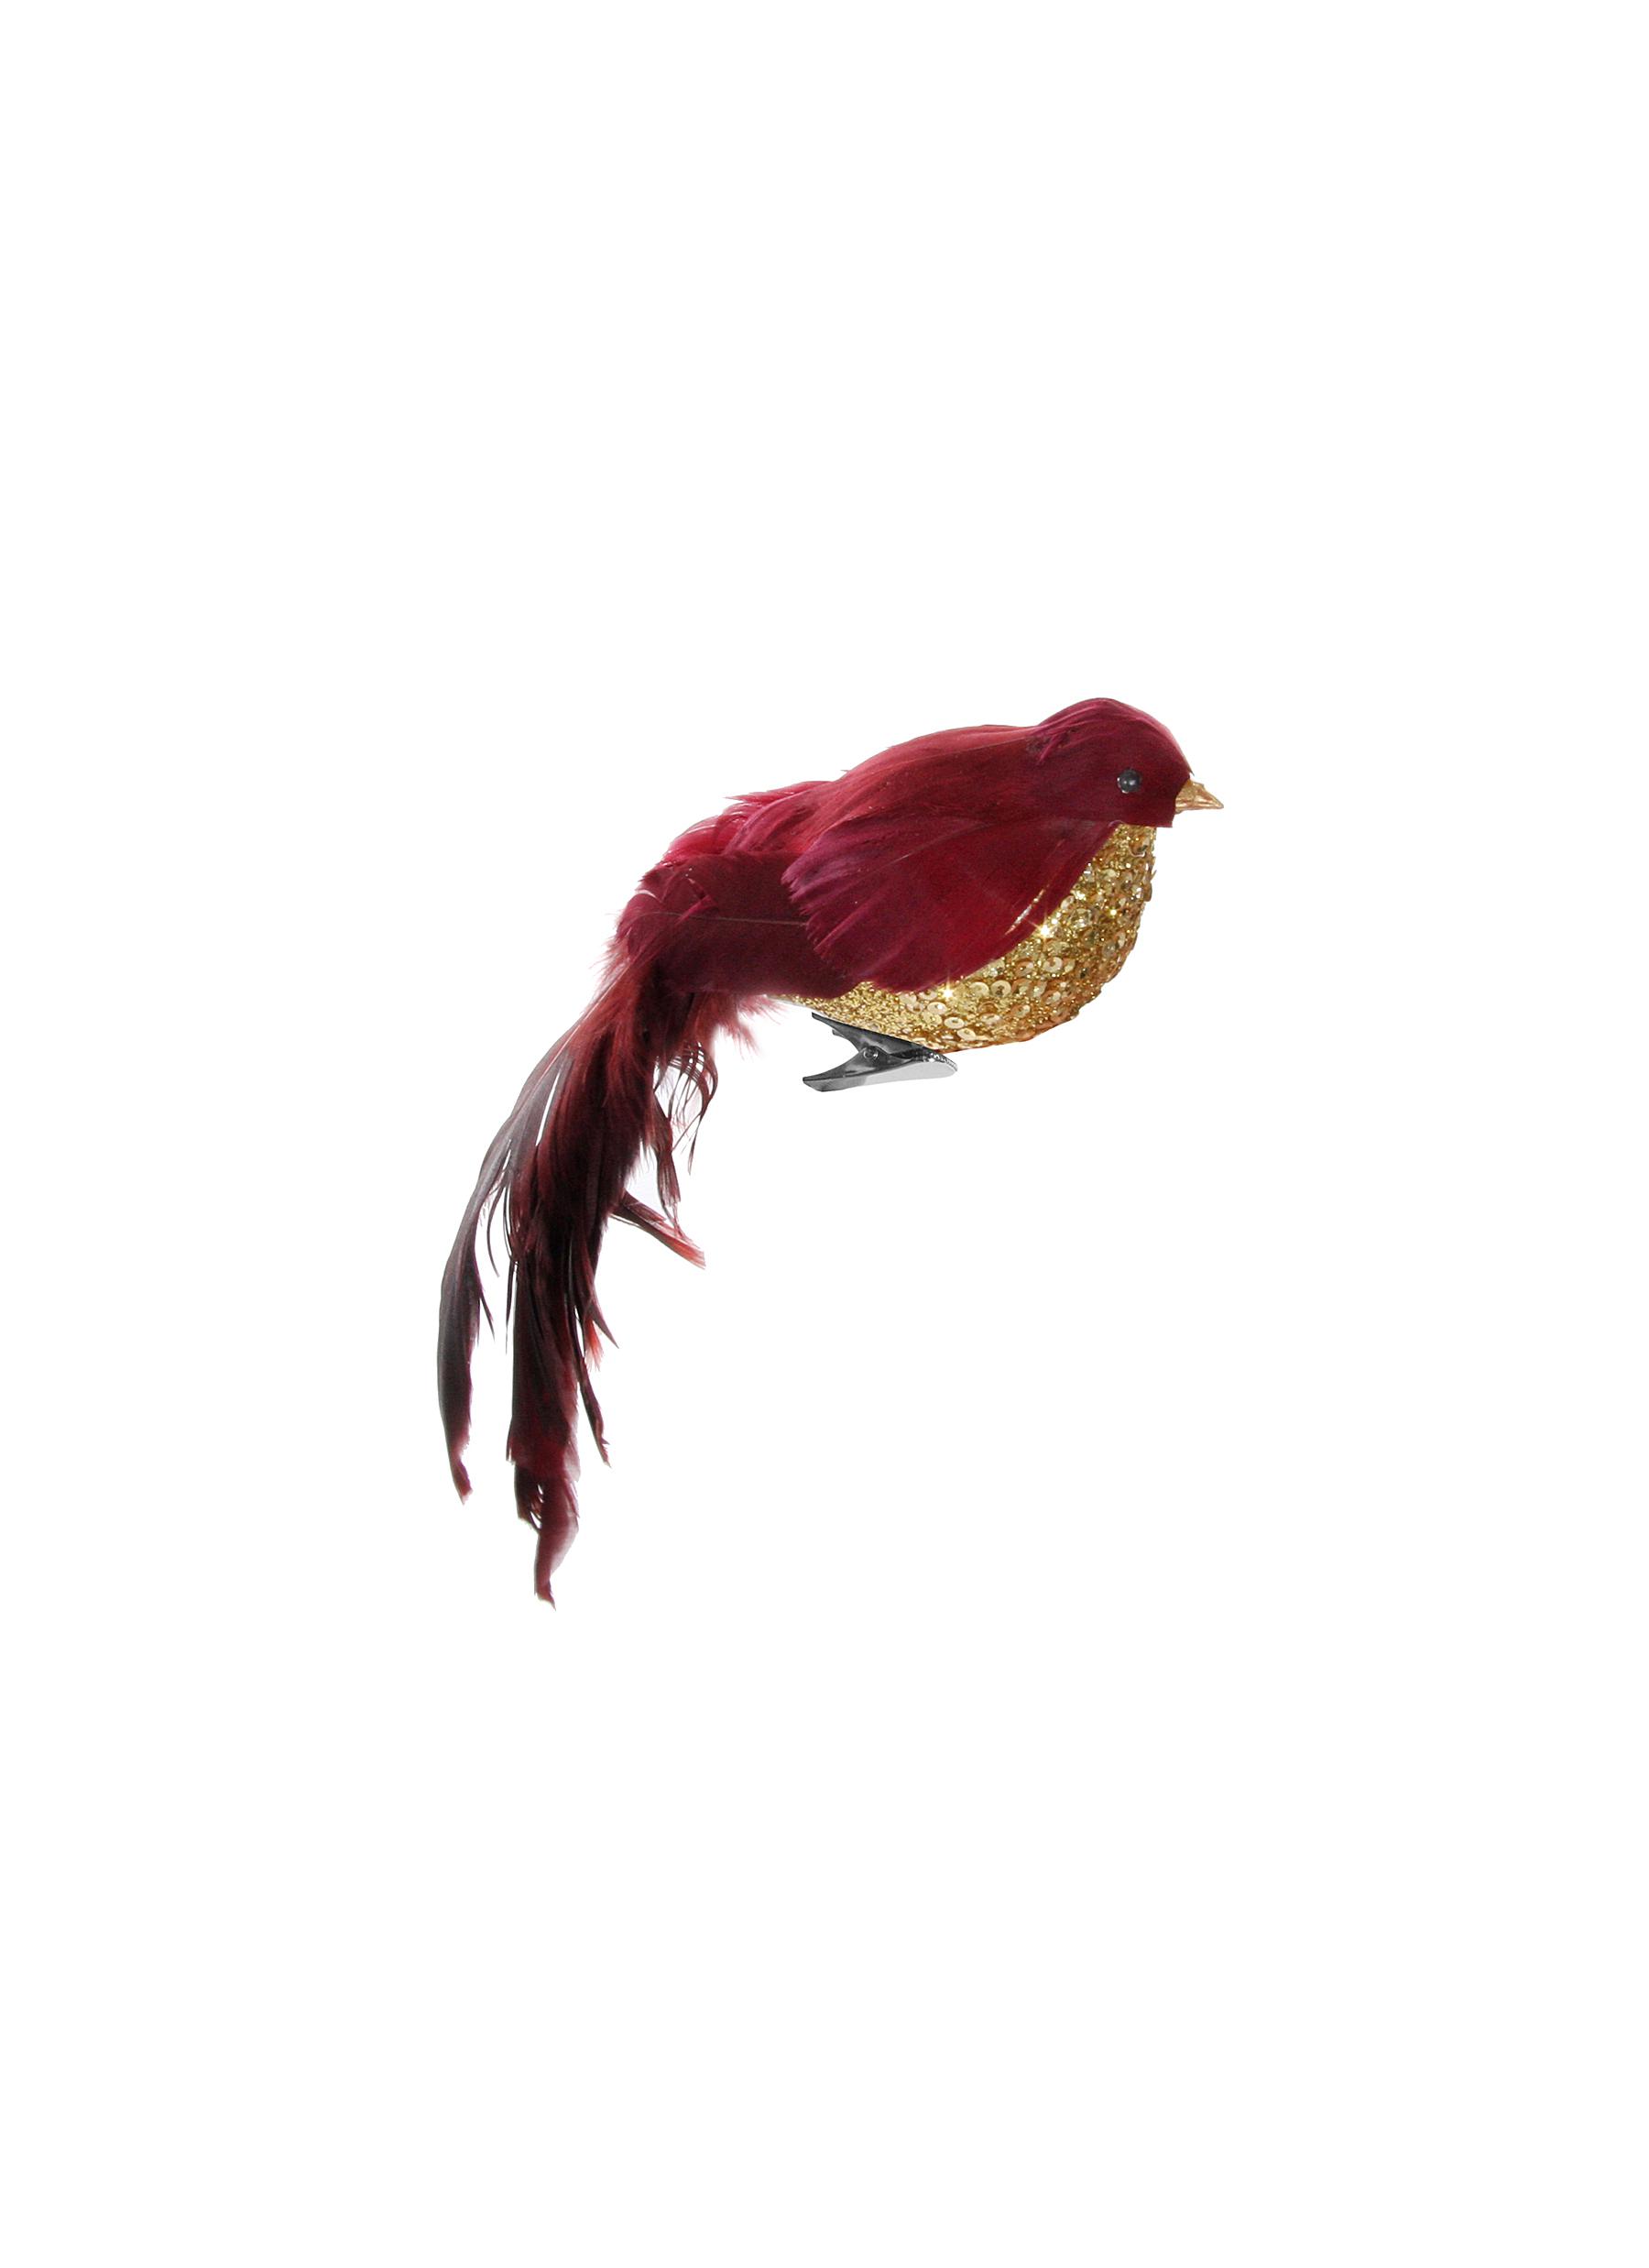 GLITTER FEATHER TAIL BIRD ORNAMENT - BURGUNDY/GOLD